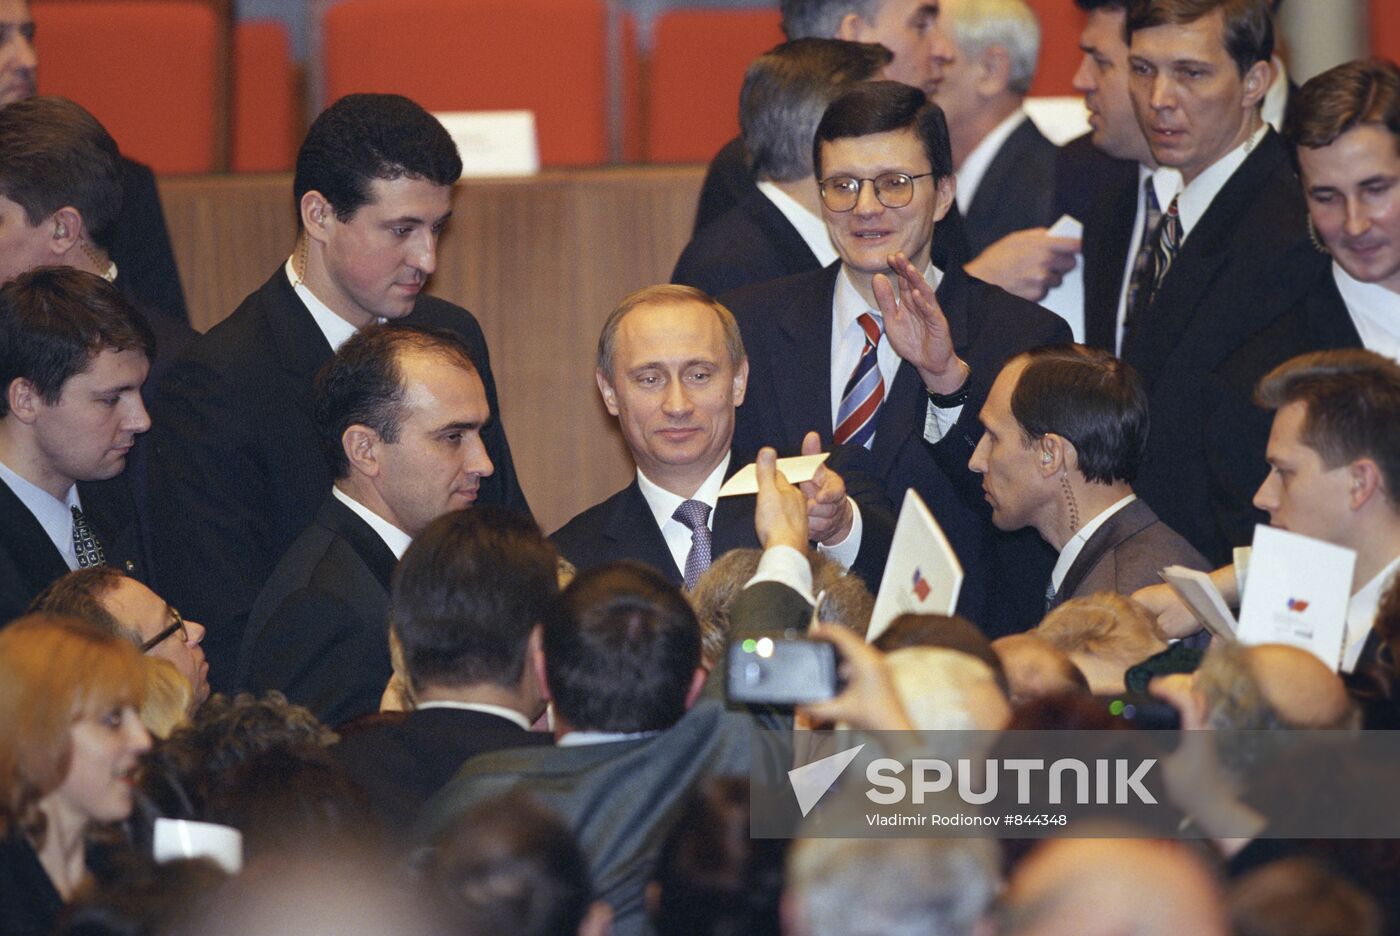 Vladimir Putin speaks with meeting participants